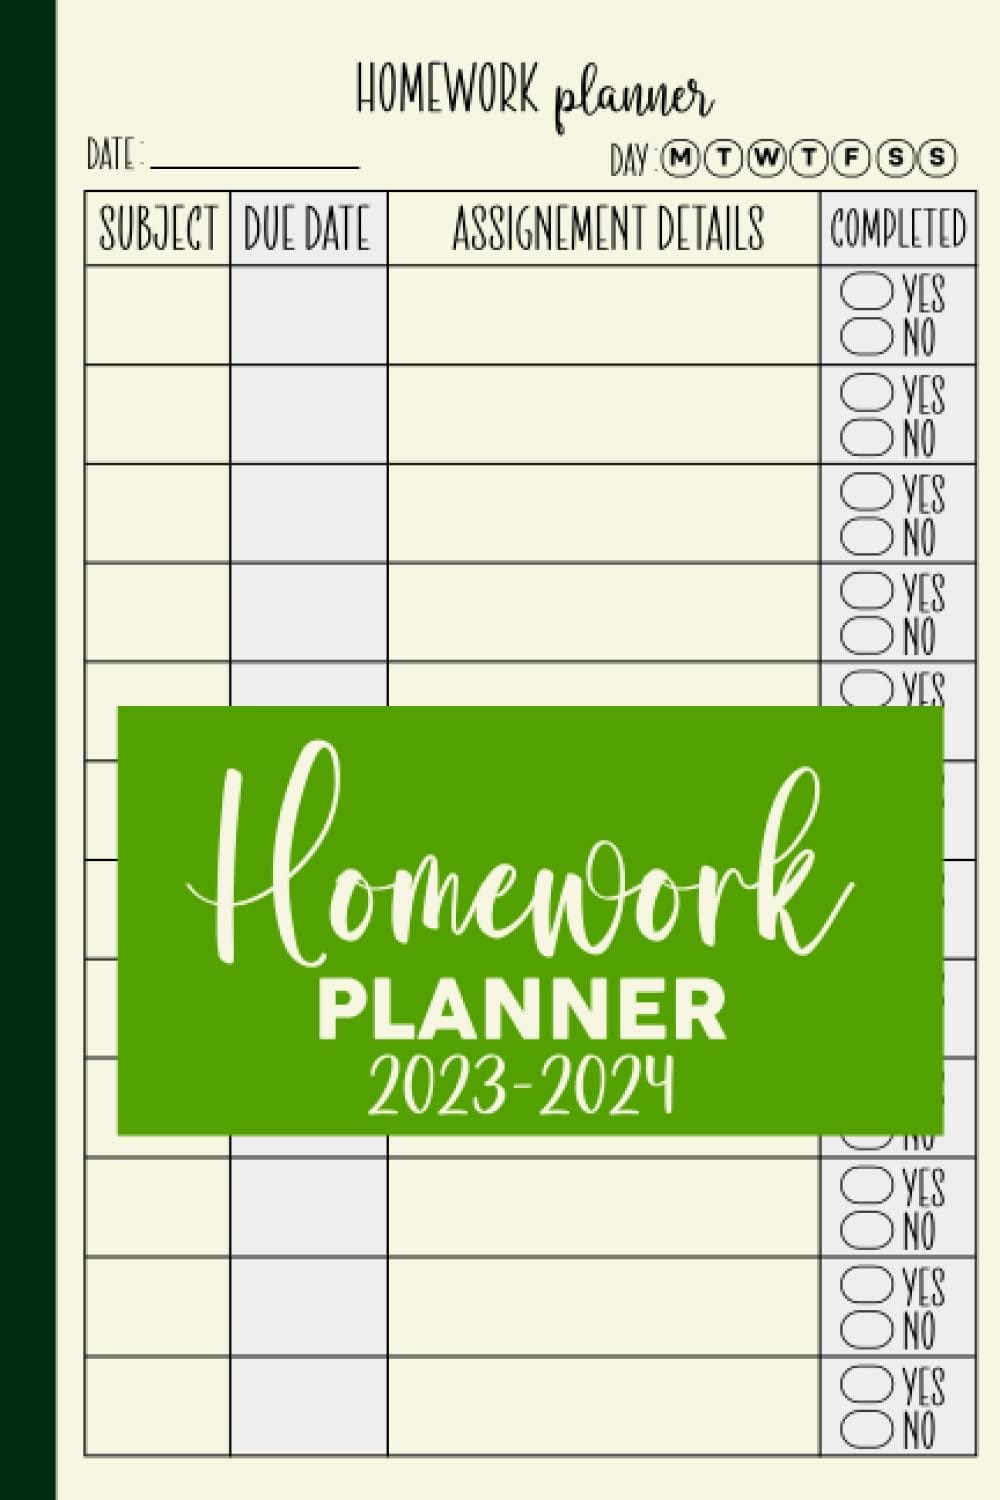  Homework Planner 2023-2024: For students in elementary